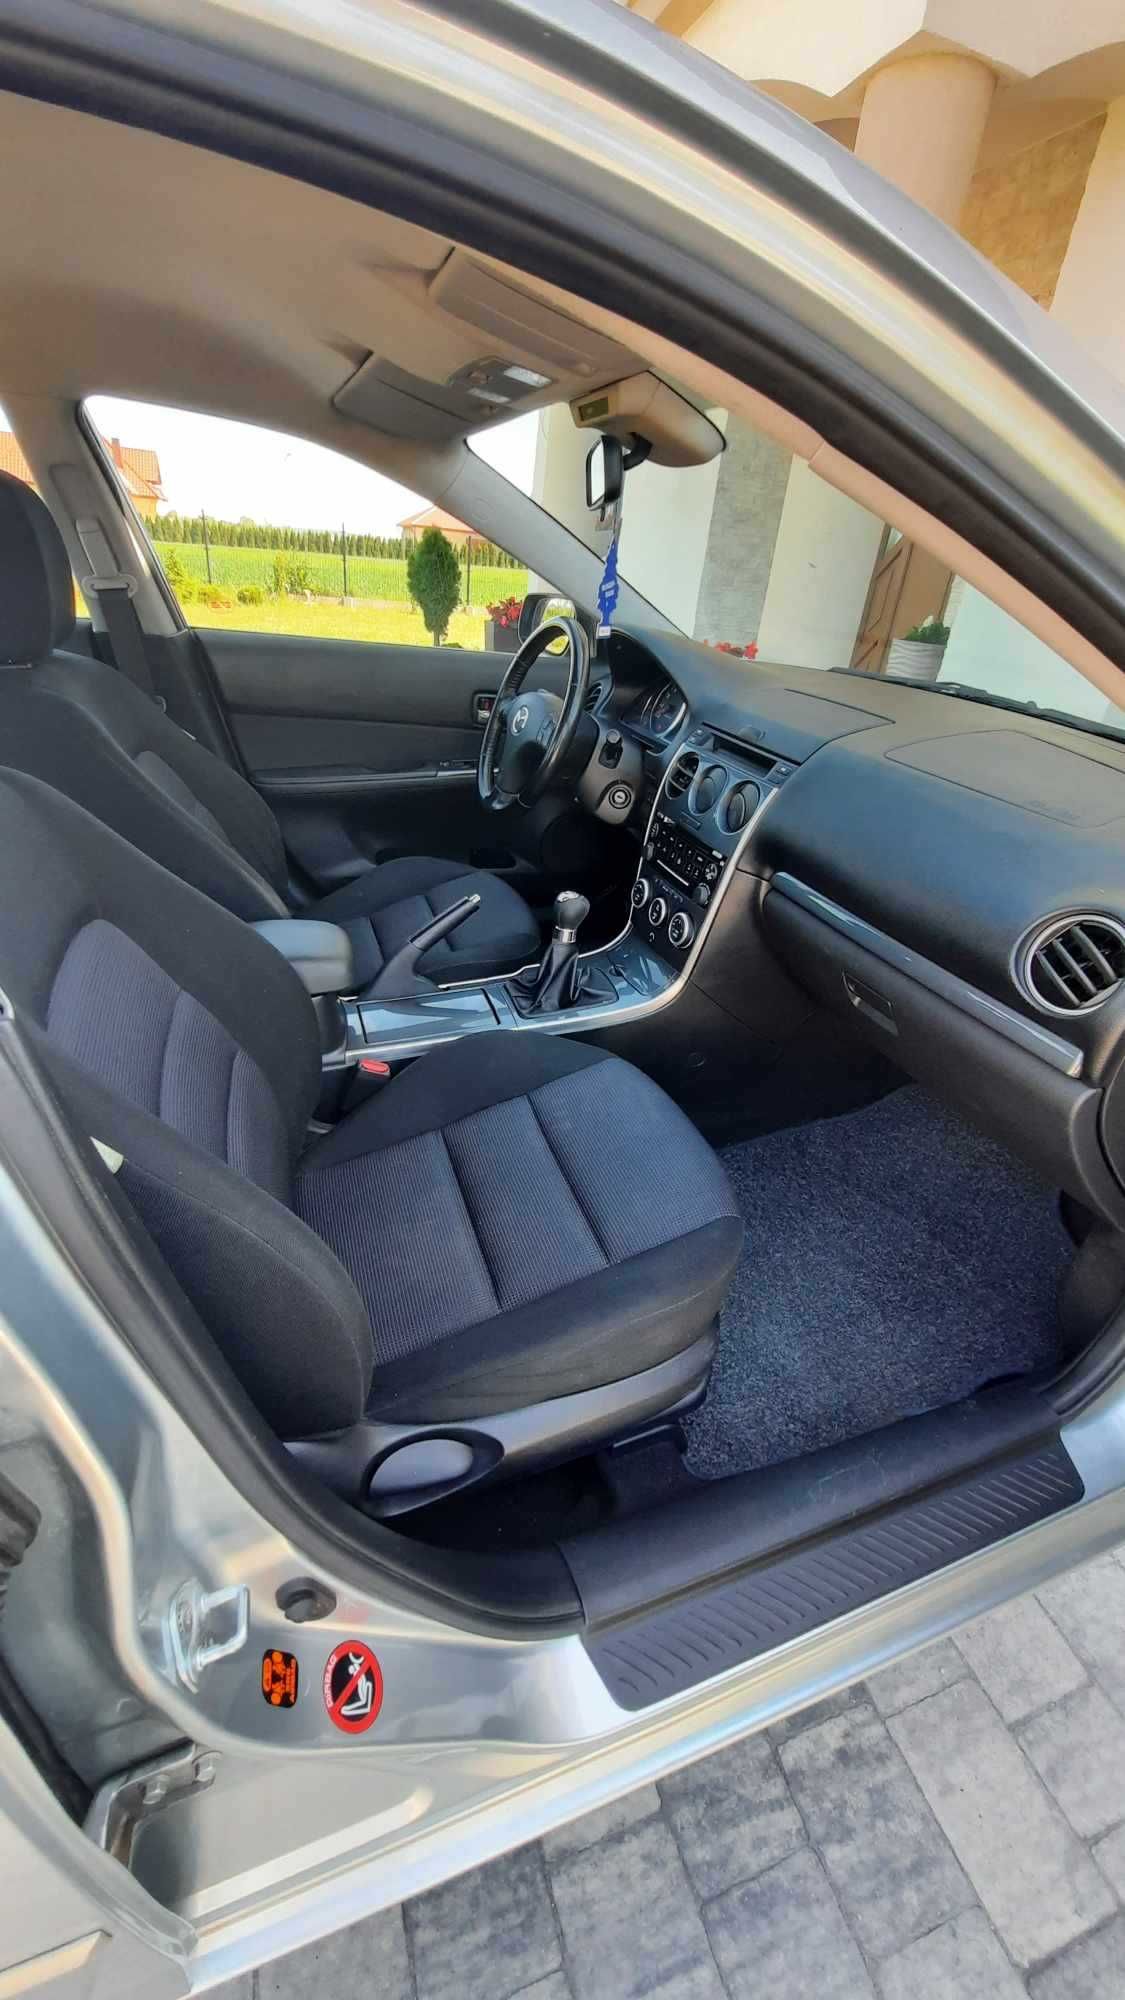 Mazda 6 1.8 benzyna,  sedan, bezwypadkowy, po liftingu